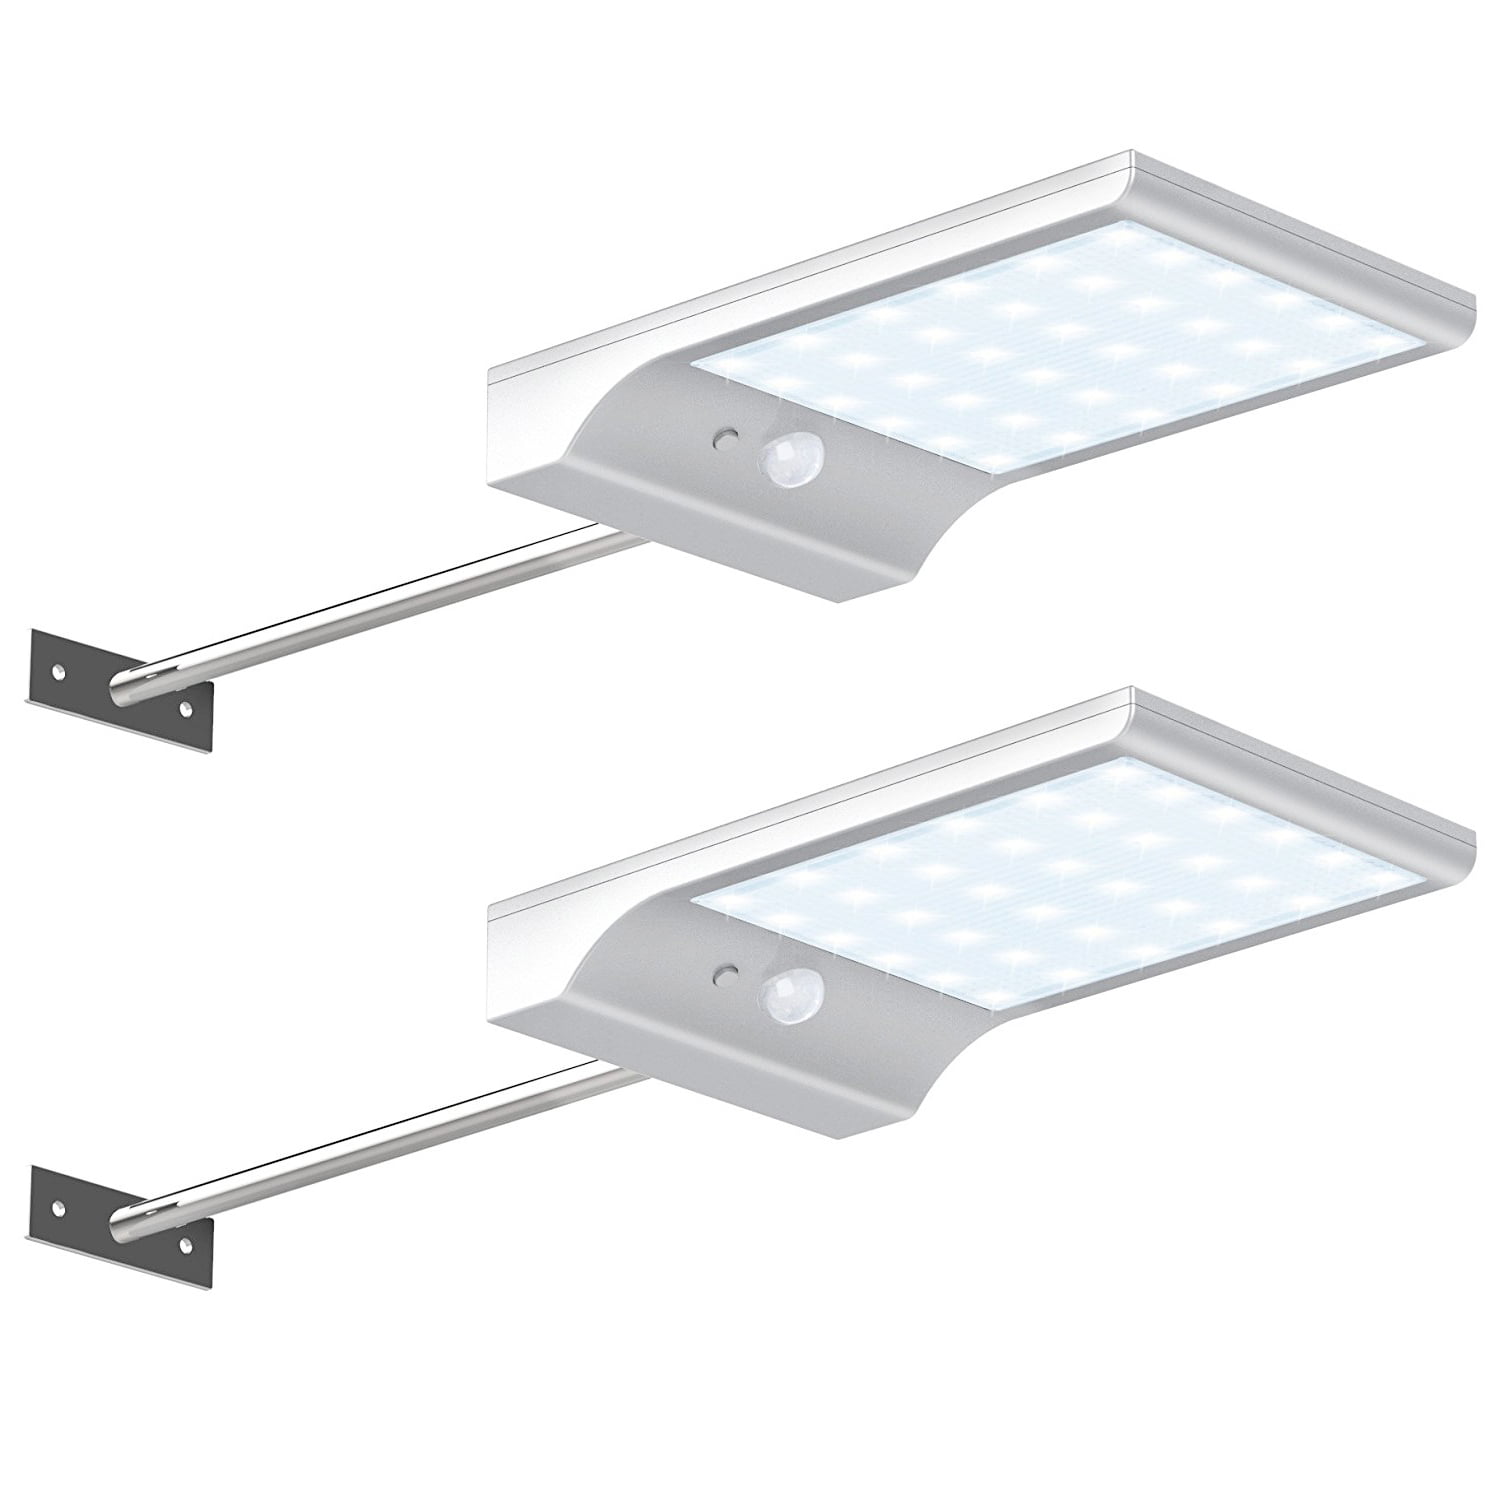 72 LED Solar Power Gutter Security Wall Light Motion Sensor Lamp Outdoor IP65 US 